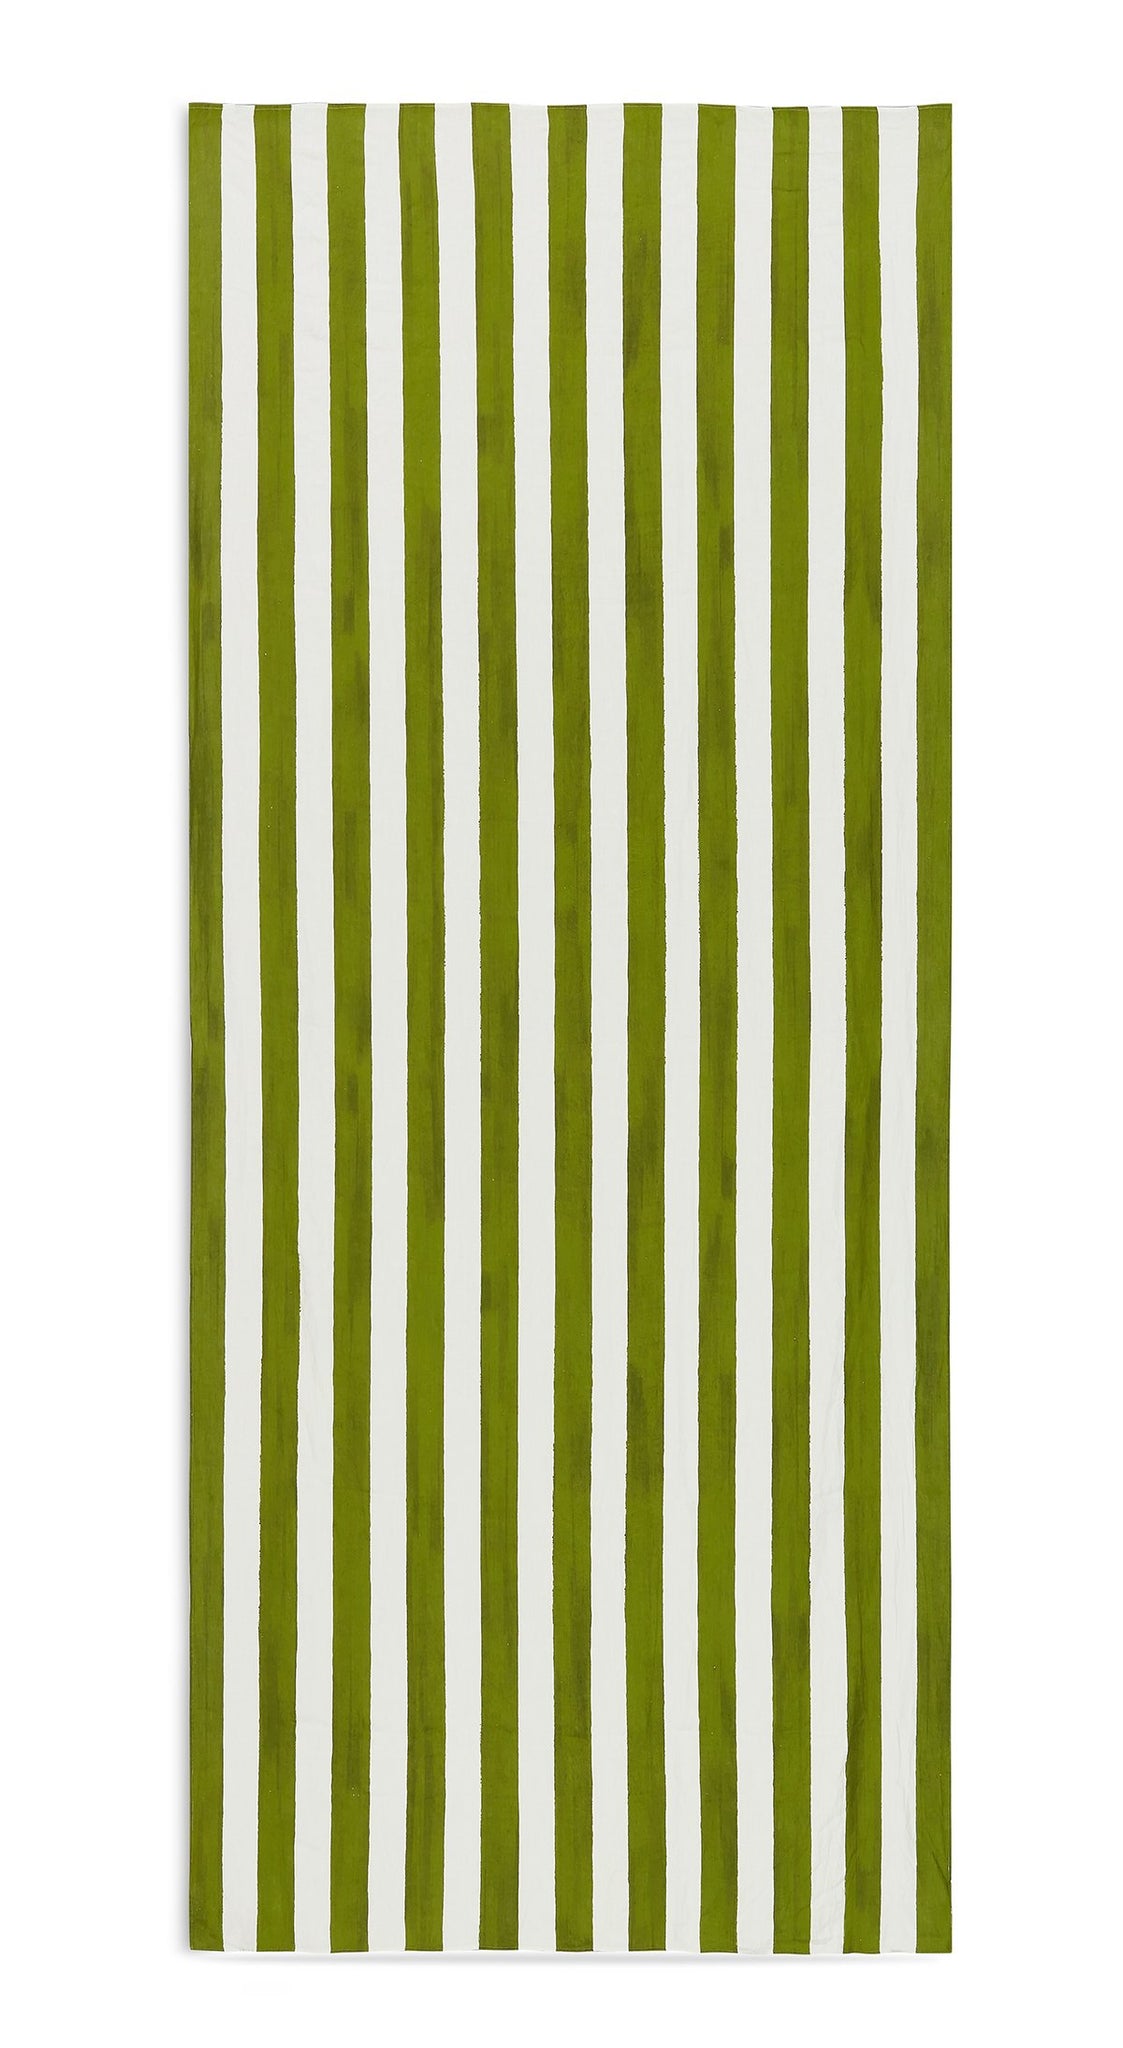 Green Striped Linen Tablecloth